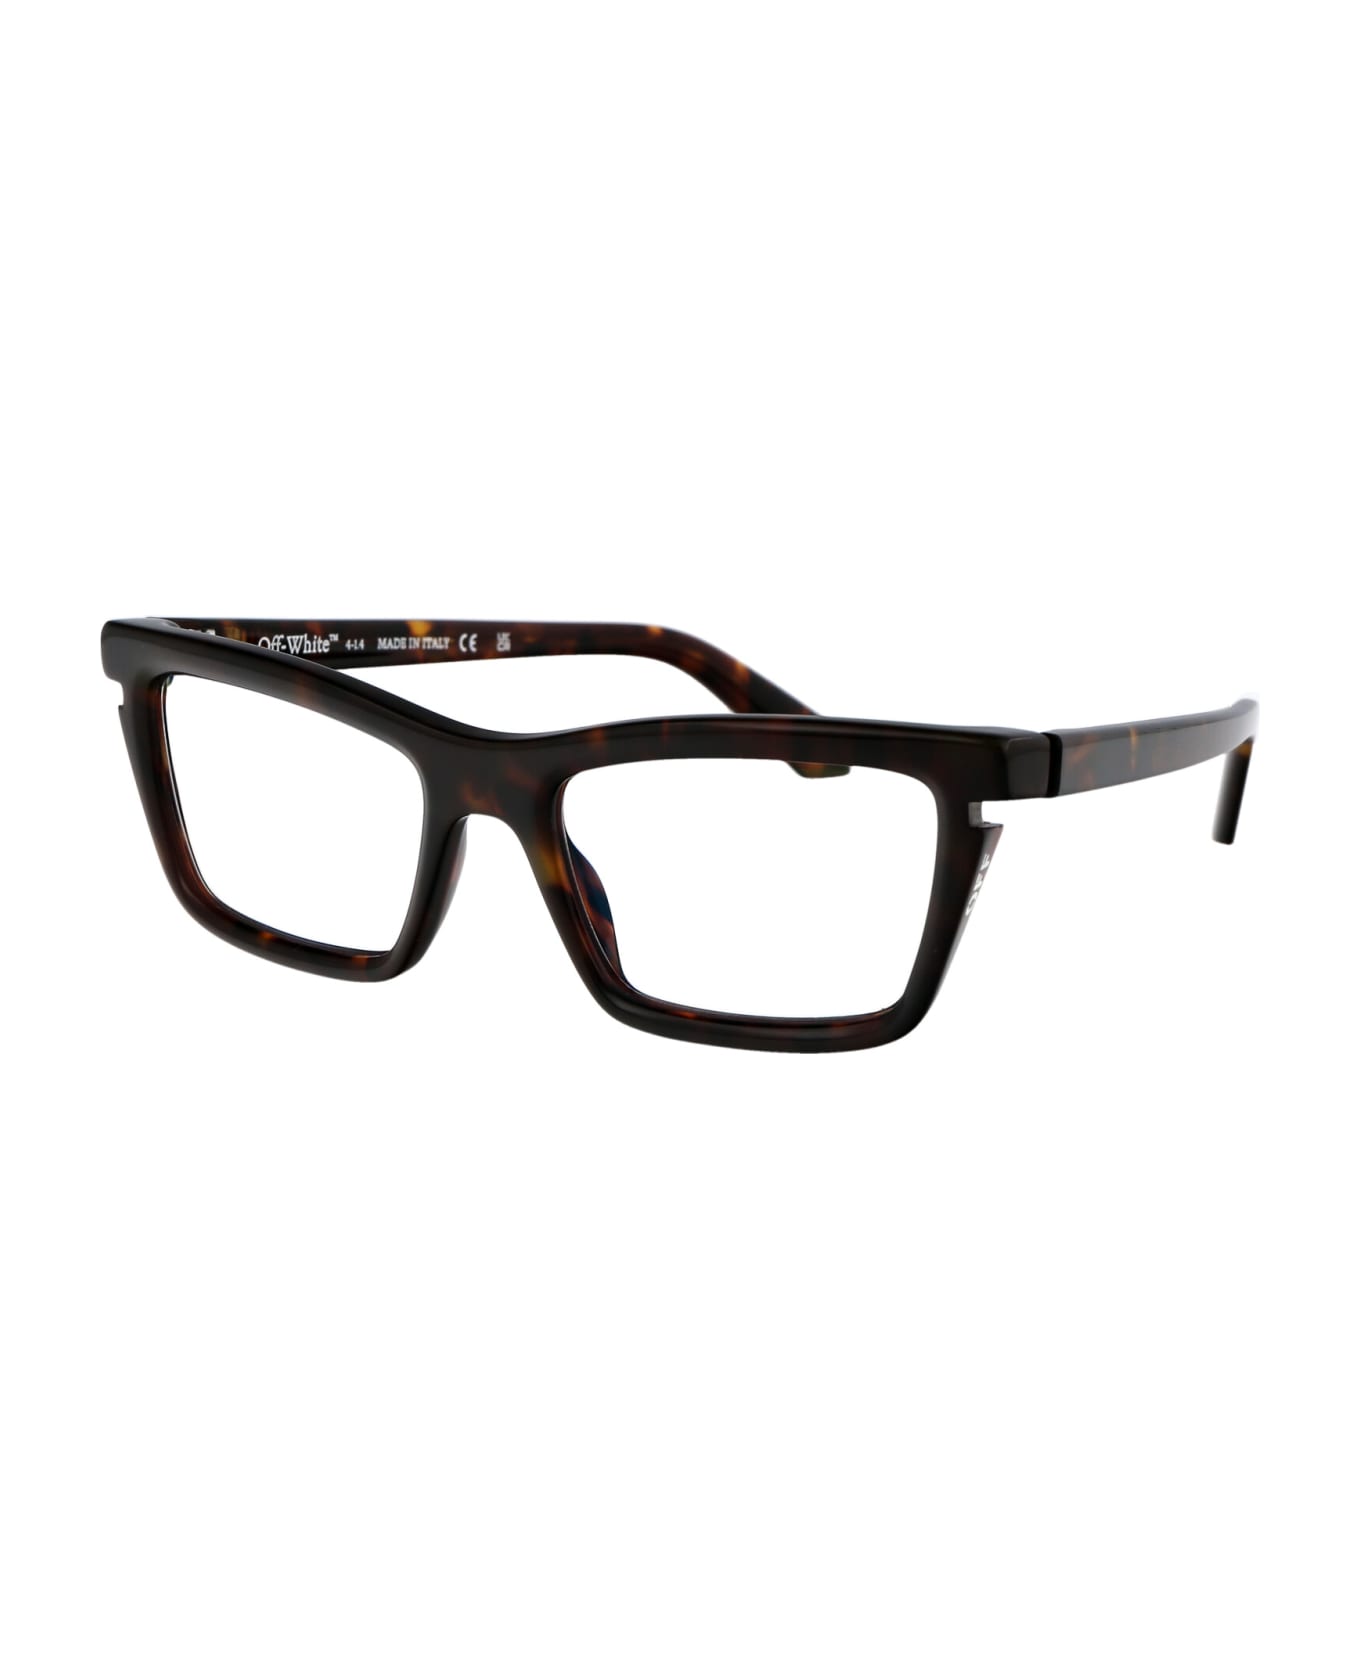 Off-White Optical Style 50 Glasses - 6000 HAVANA アイウェア